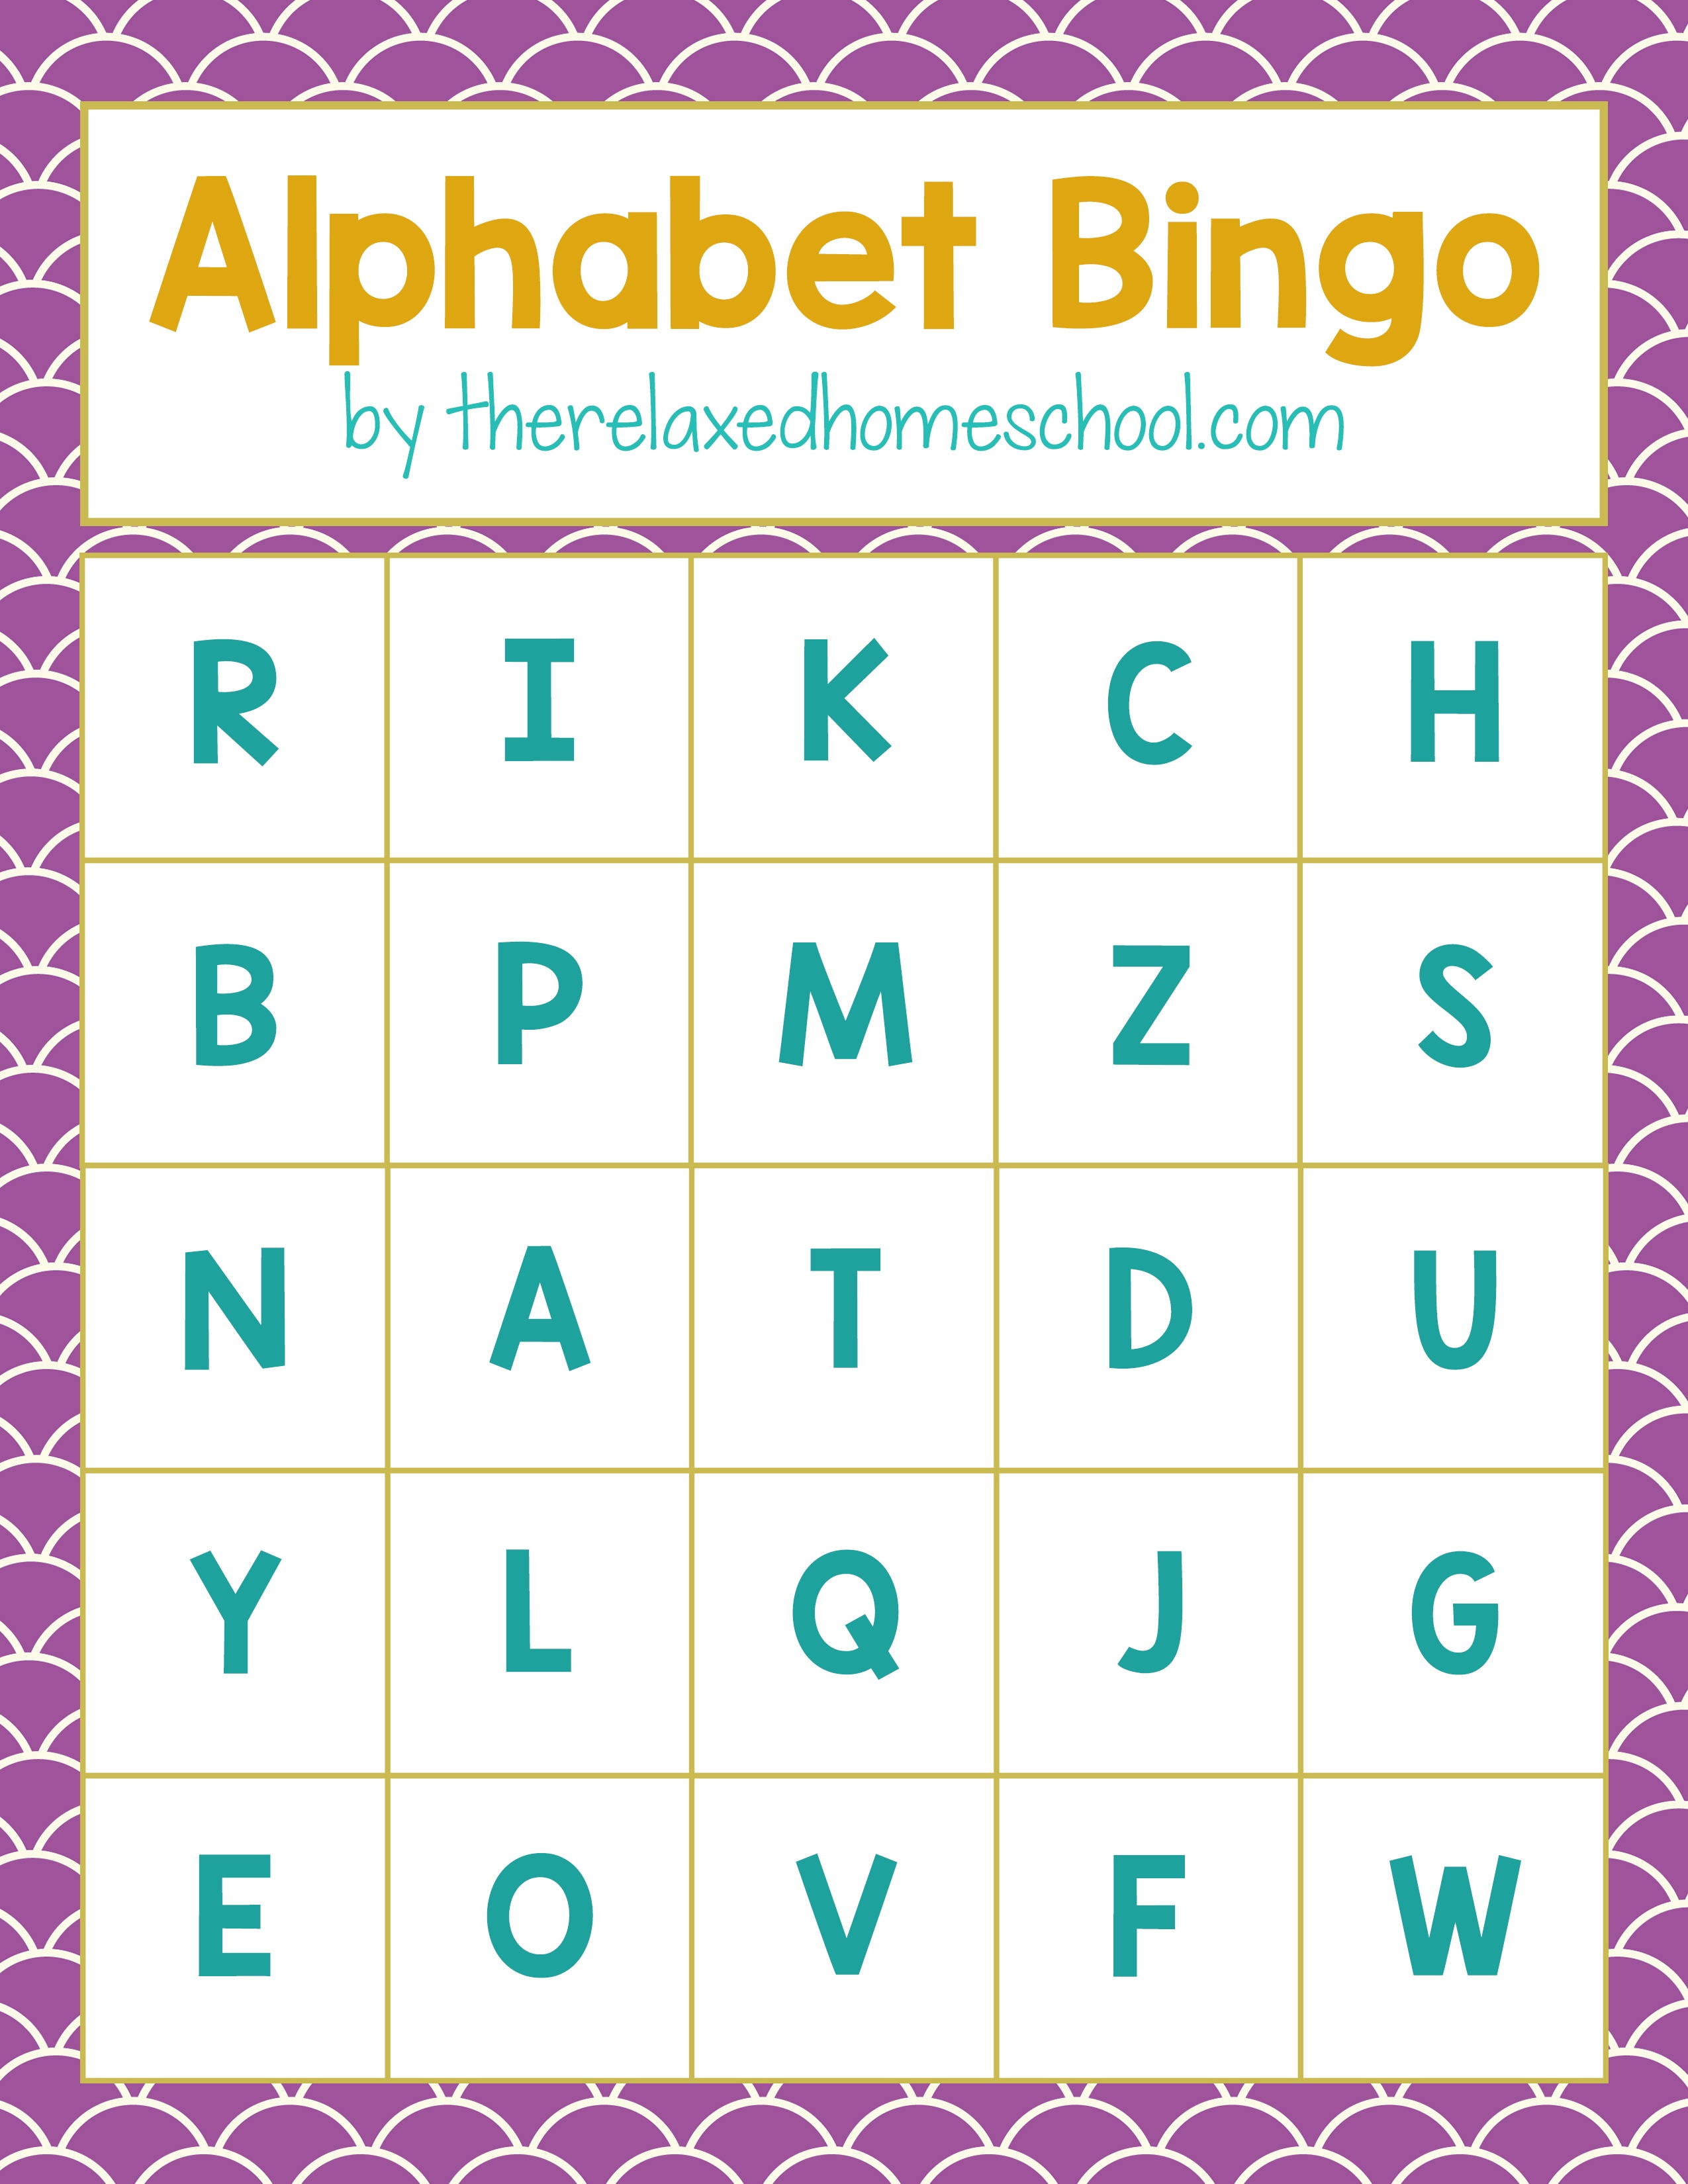 Free Printable! Alphabet Letters Bingo Game - Download Here! - Free Printable Bingo